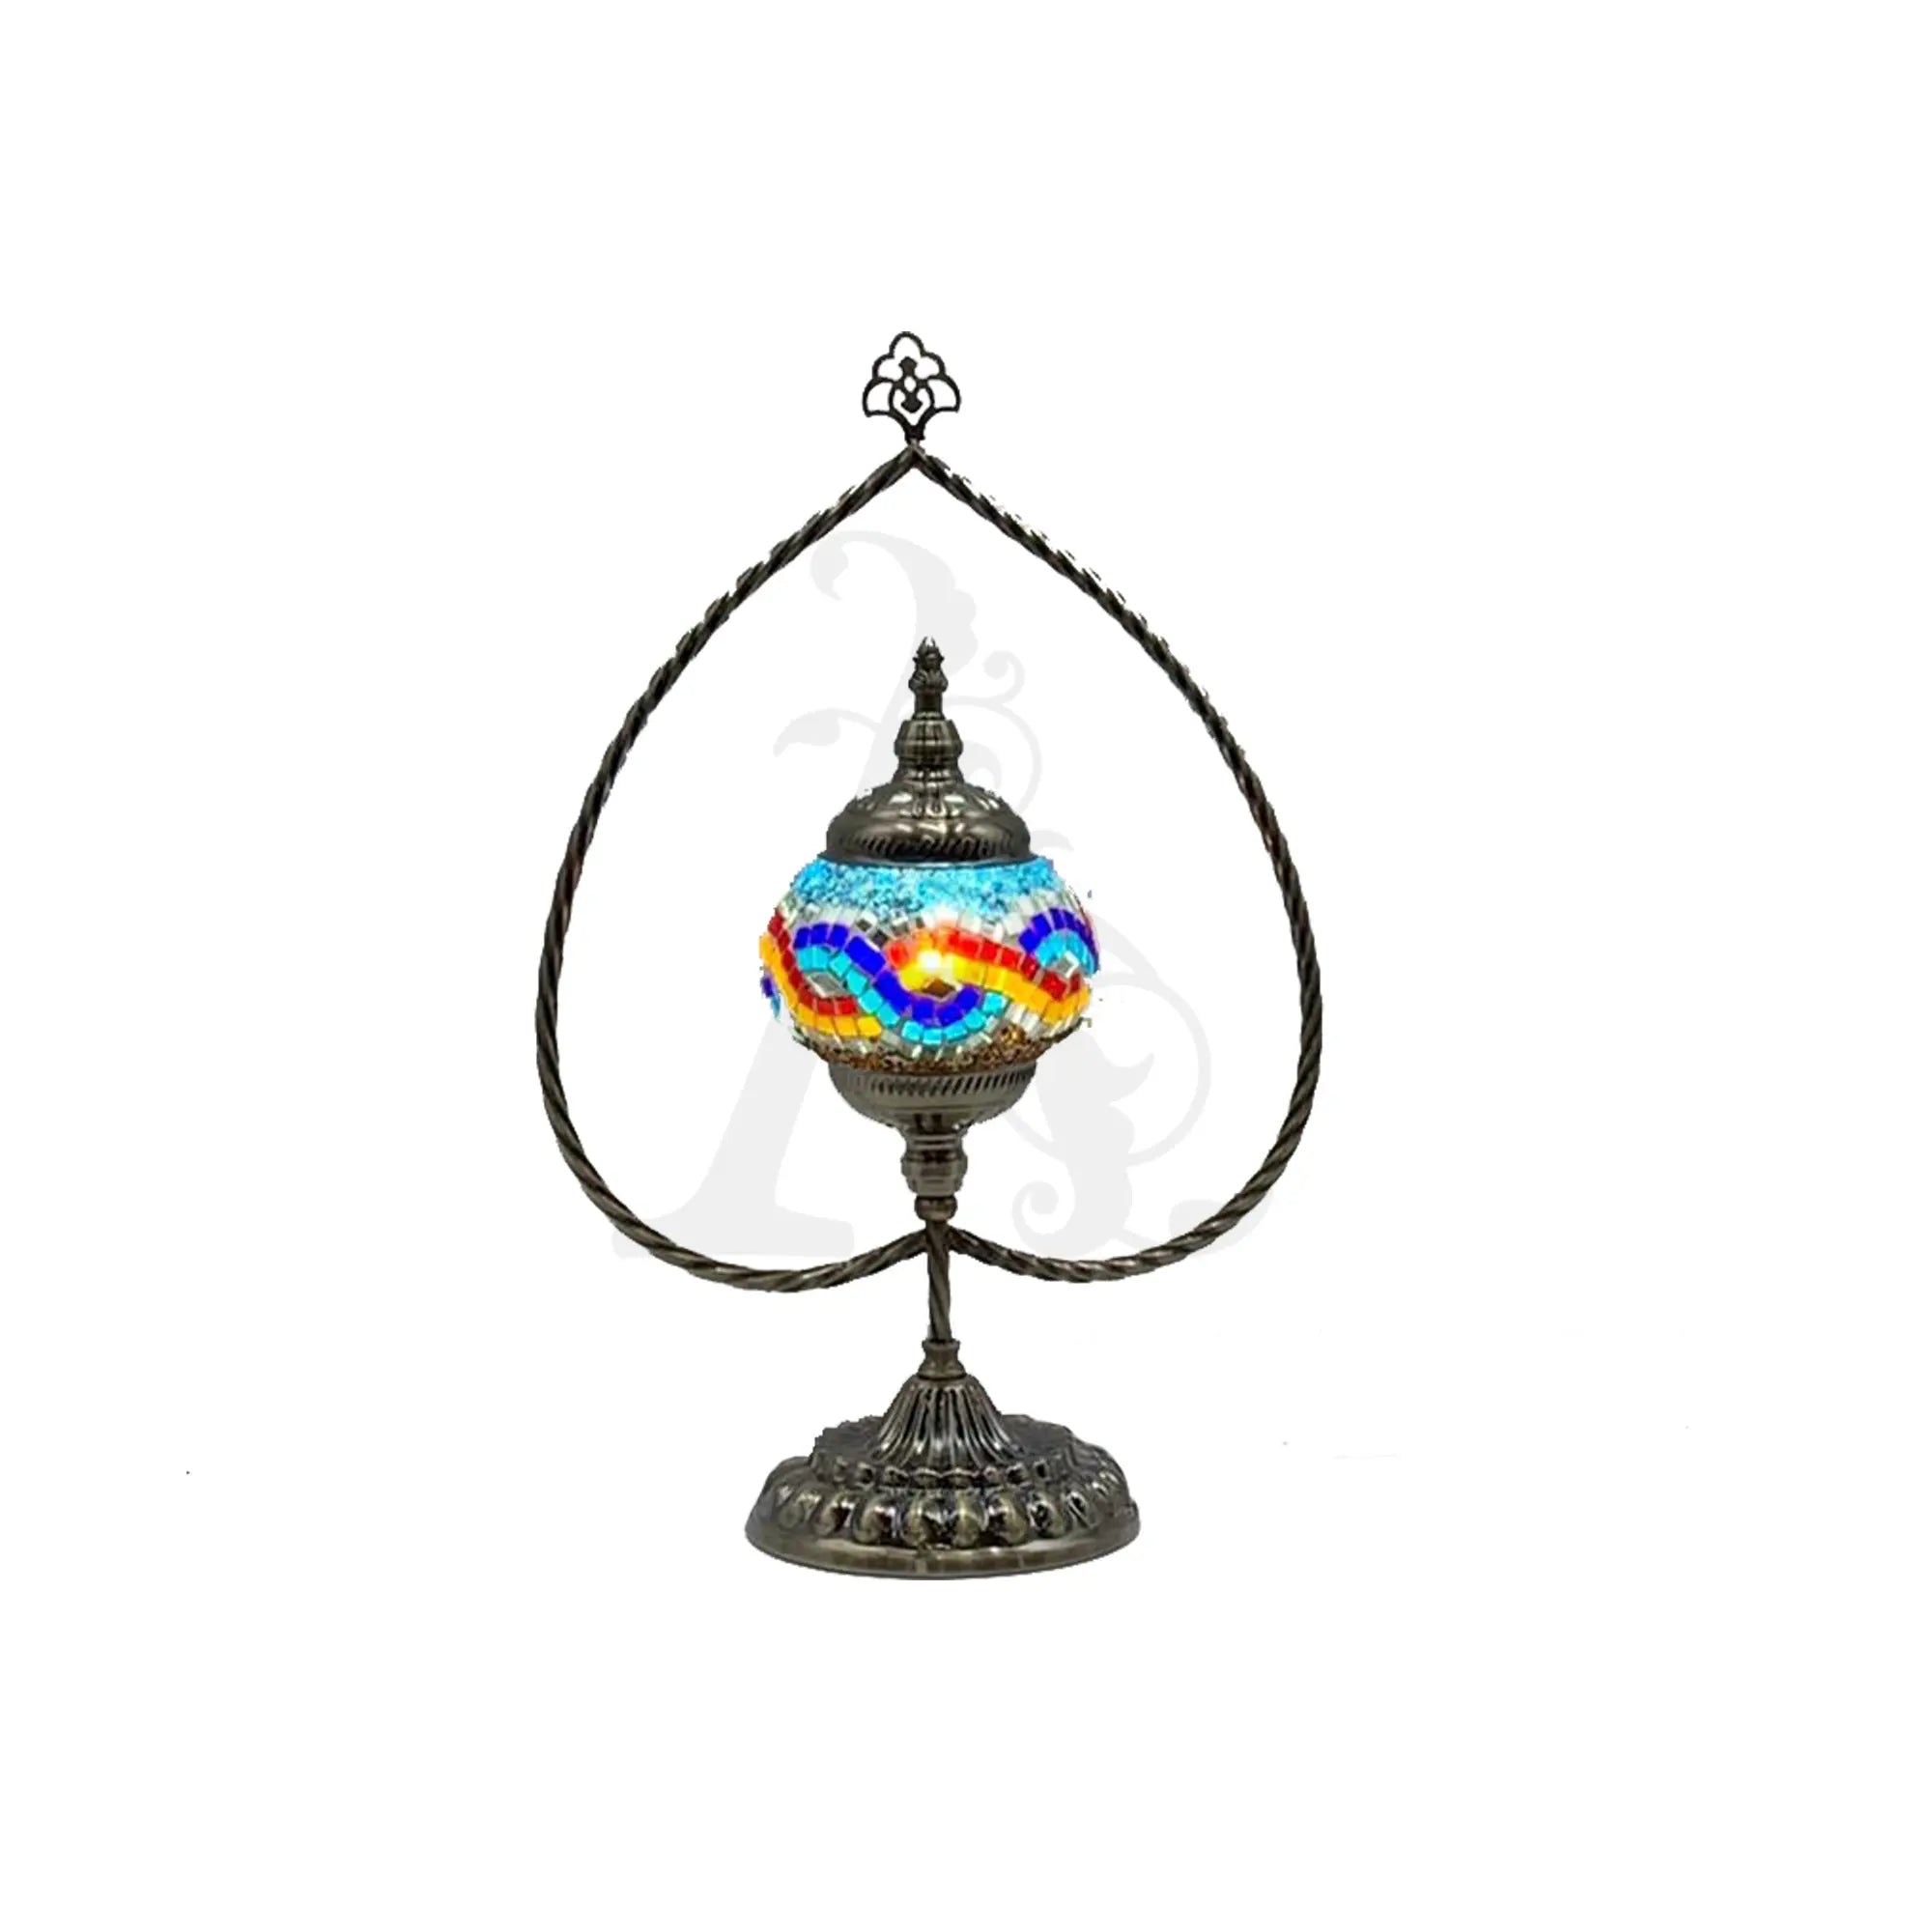 Mosaic Heart Frame Table Lamp Ax130 -  Armani Gallery -  Armani Gallery